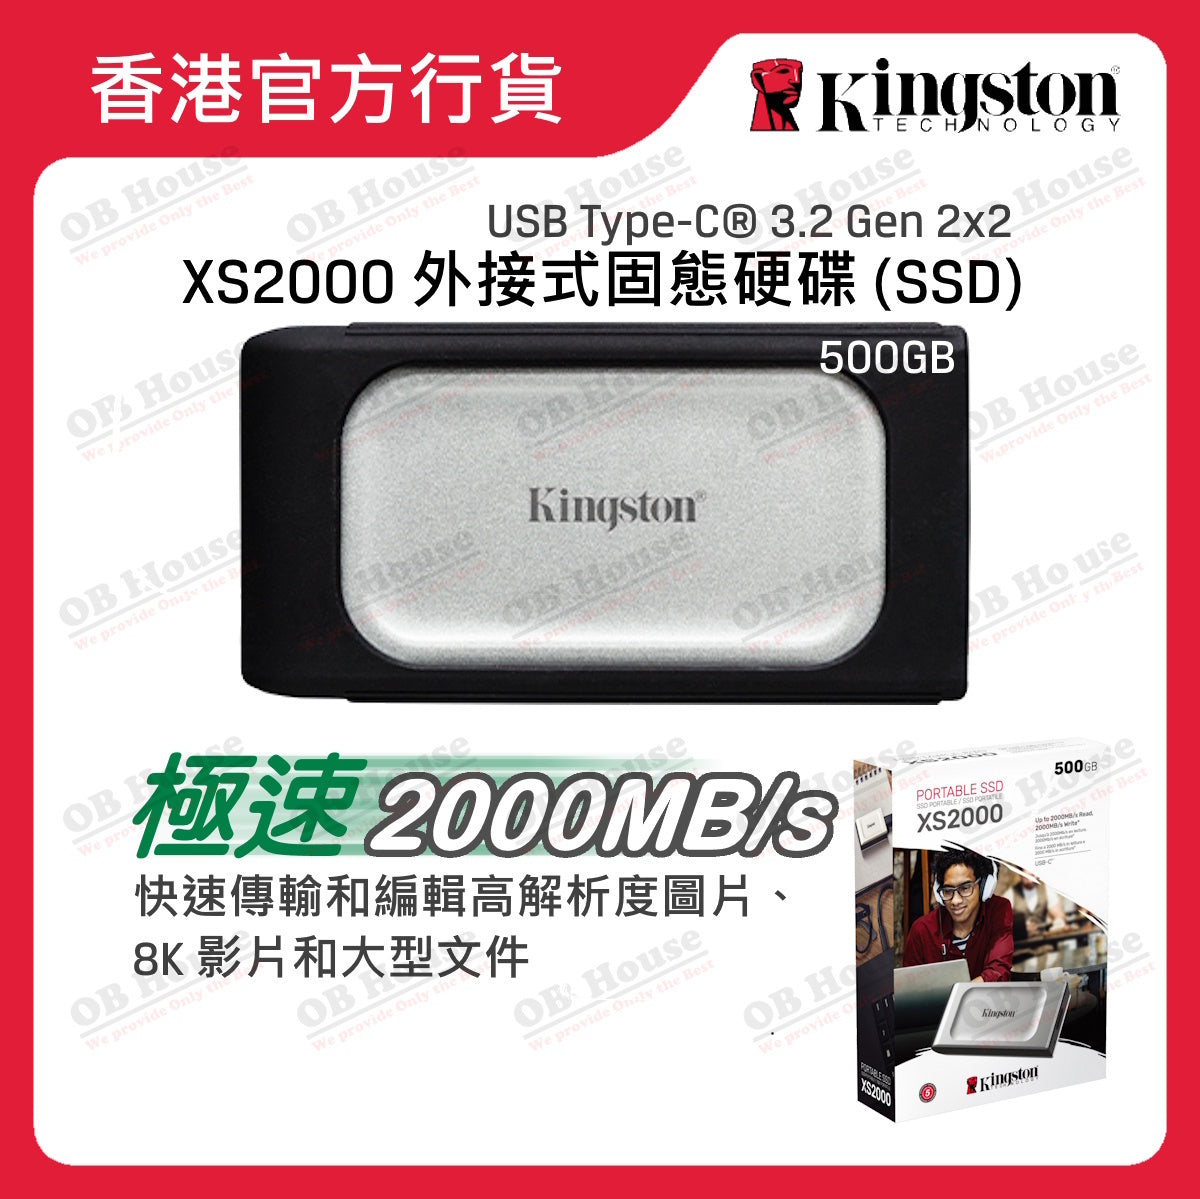 XS2000 外接式固態硬碟 SSD (SXS2000)